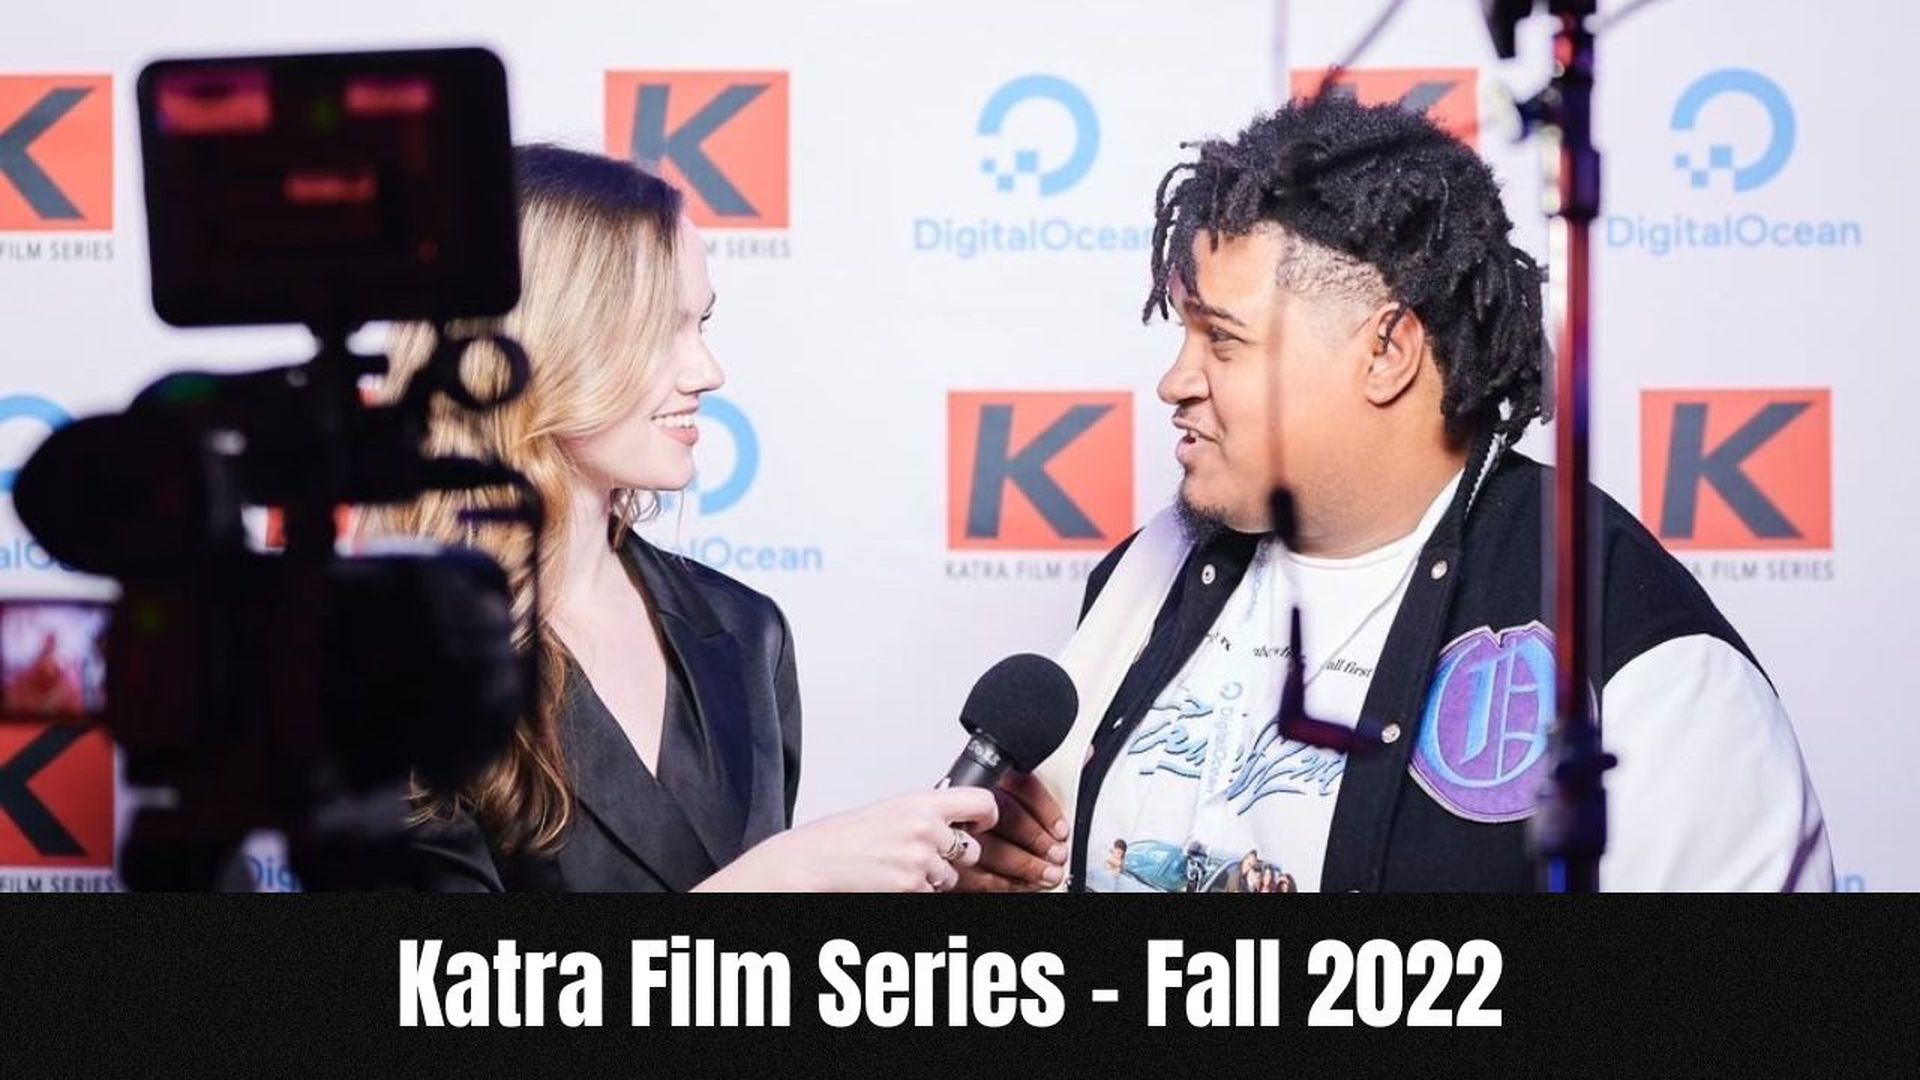 Episode 1211: Katra Film Series - Fall 2022